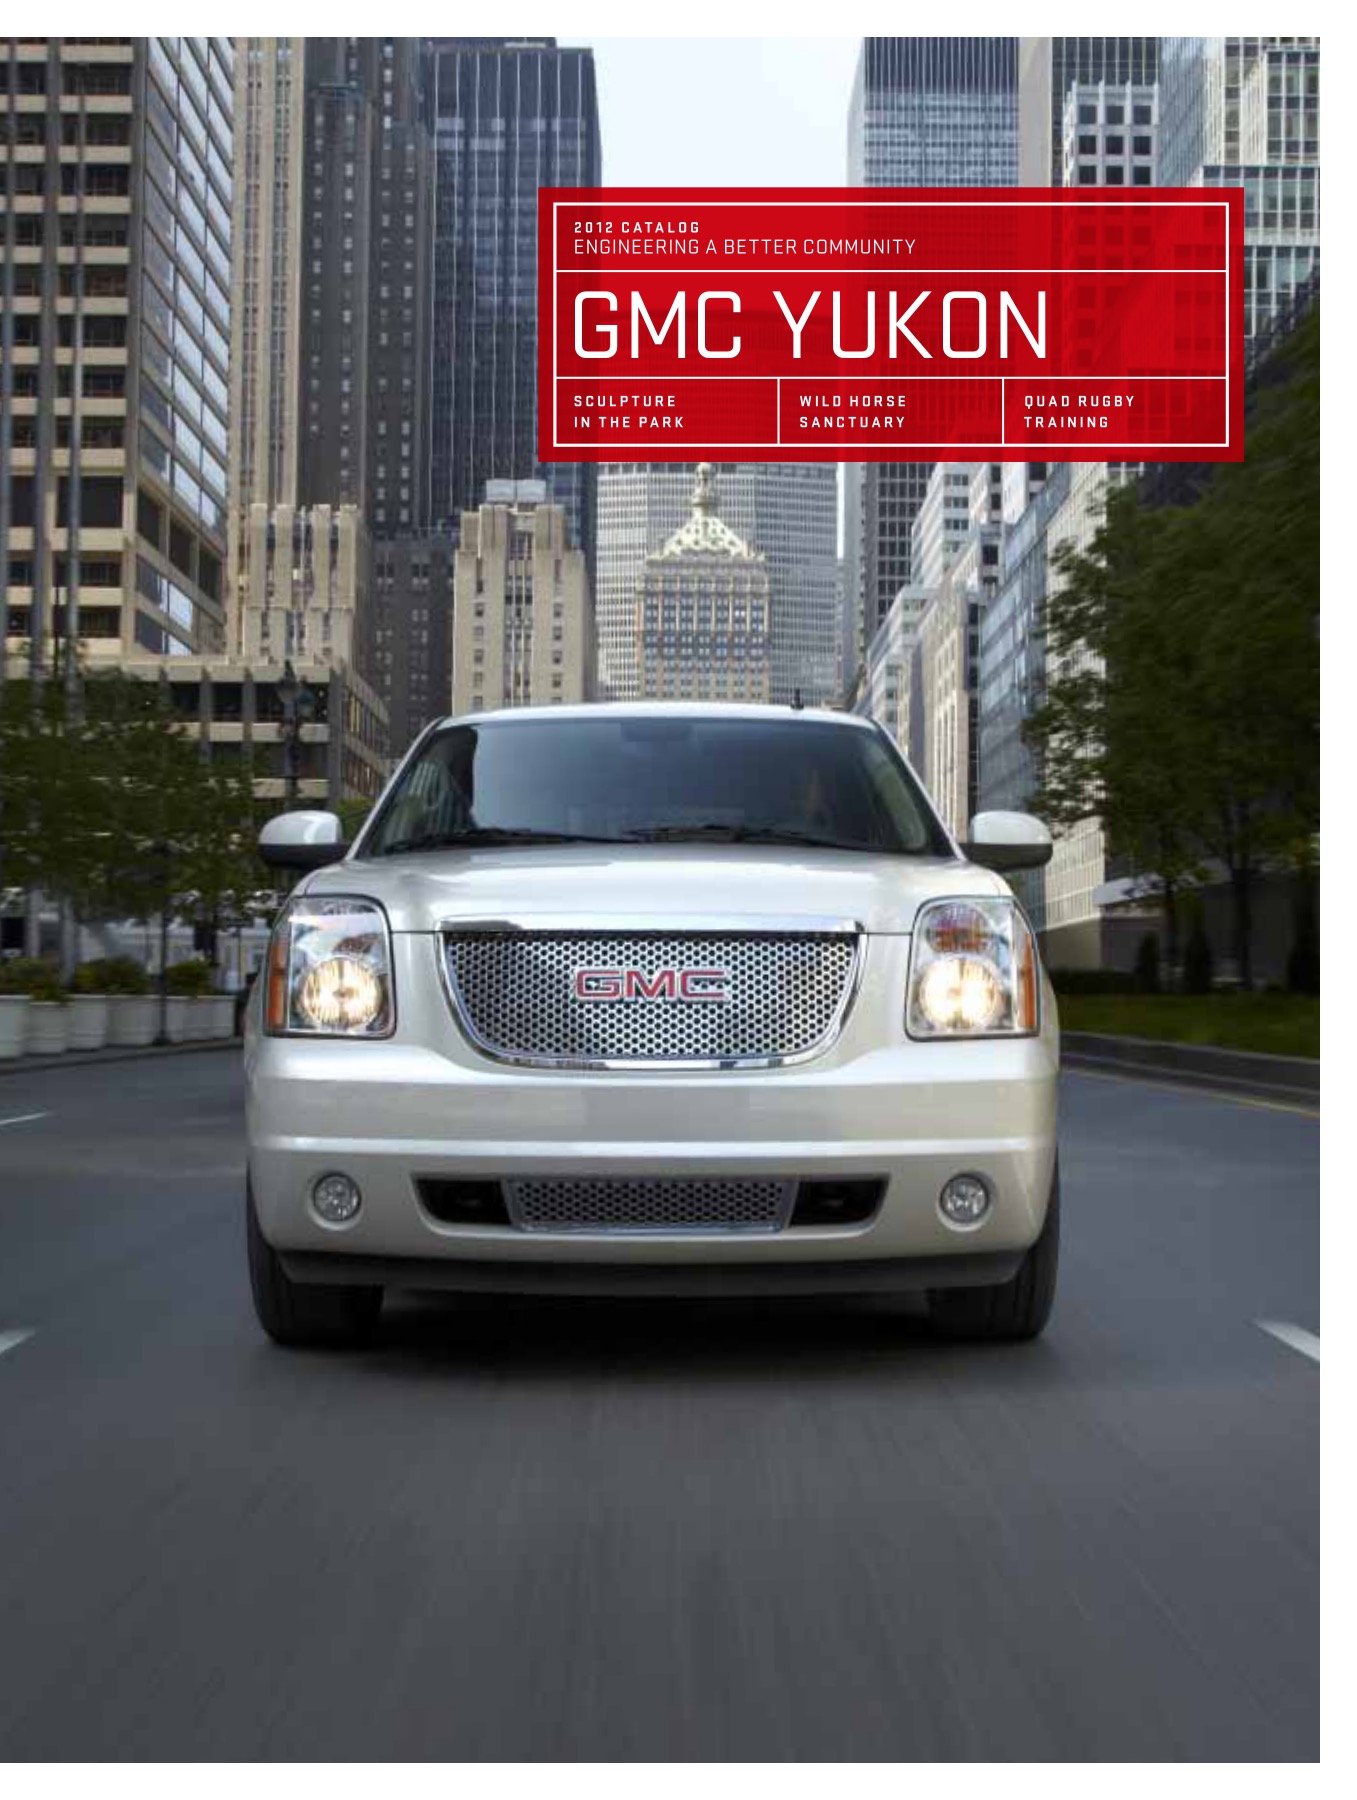 2012 GMC Yukon Brochure